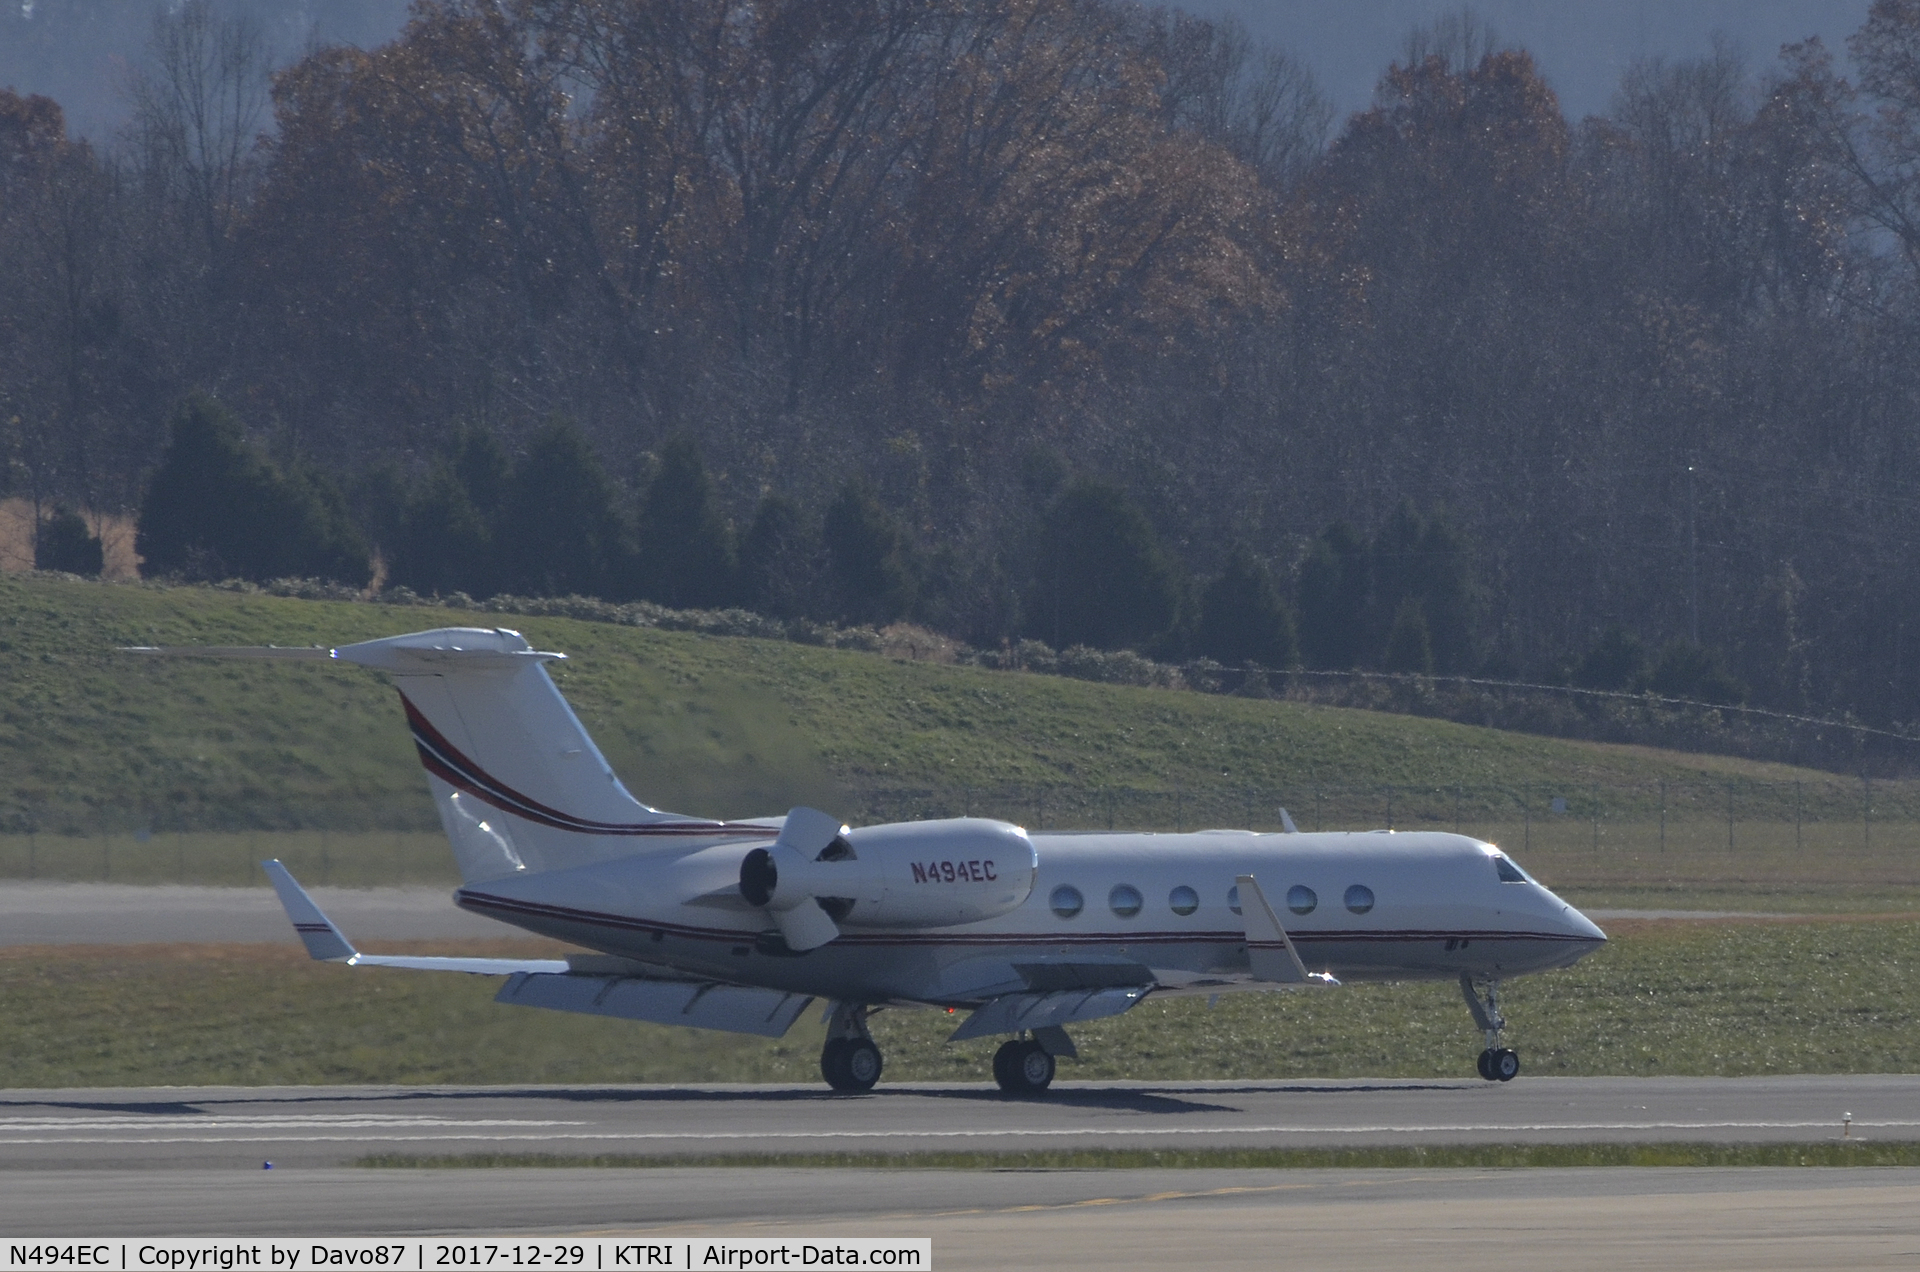 N494EC, 2011 Gulfstream Aerospace GIV-X (G450) C/N 4226, Landing with thrust reversers deployed at Tri-Cities Airport (KTRI) in Blountville, TN.